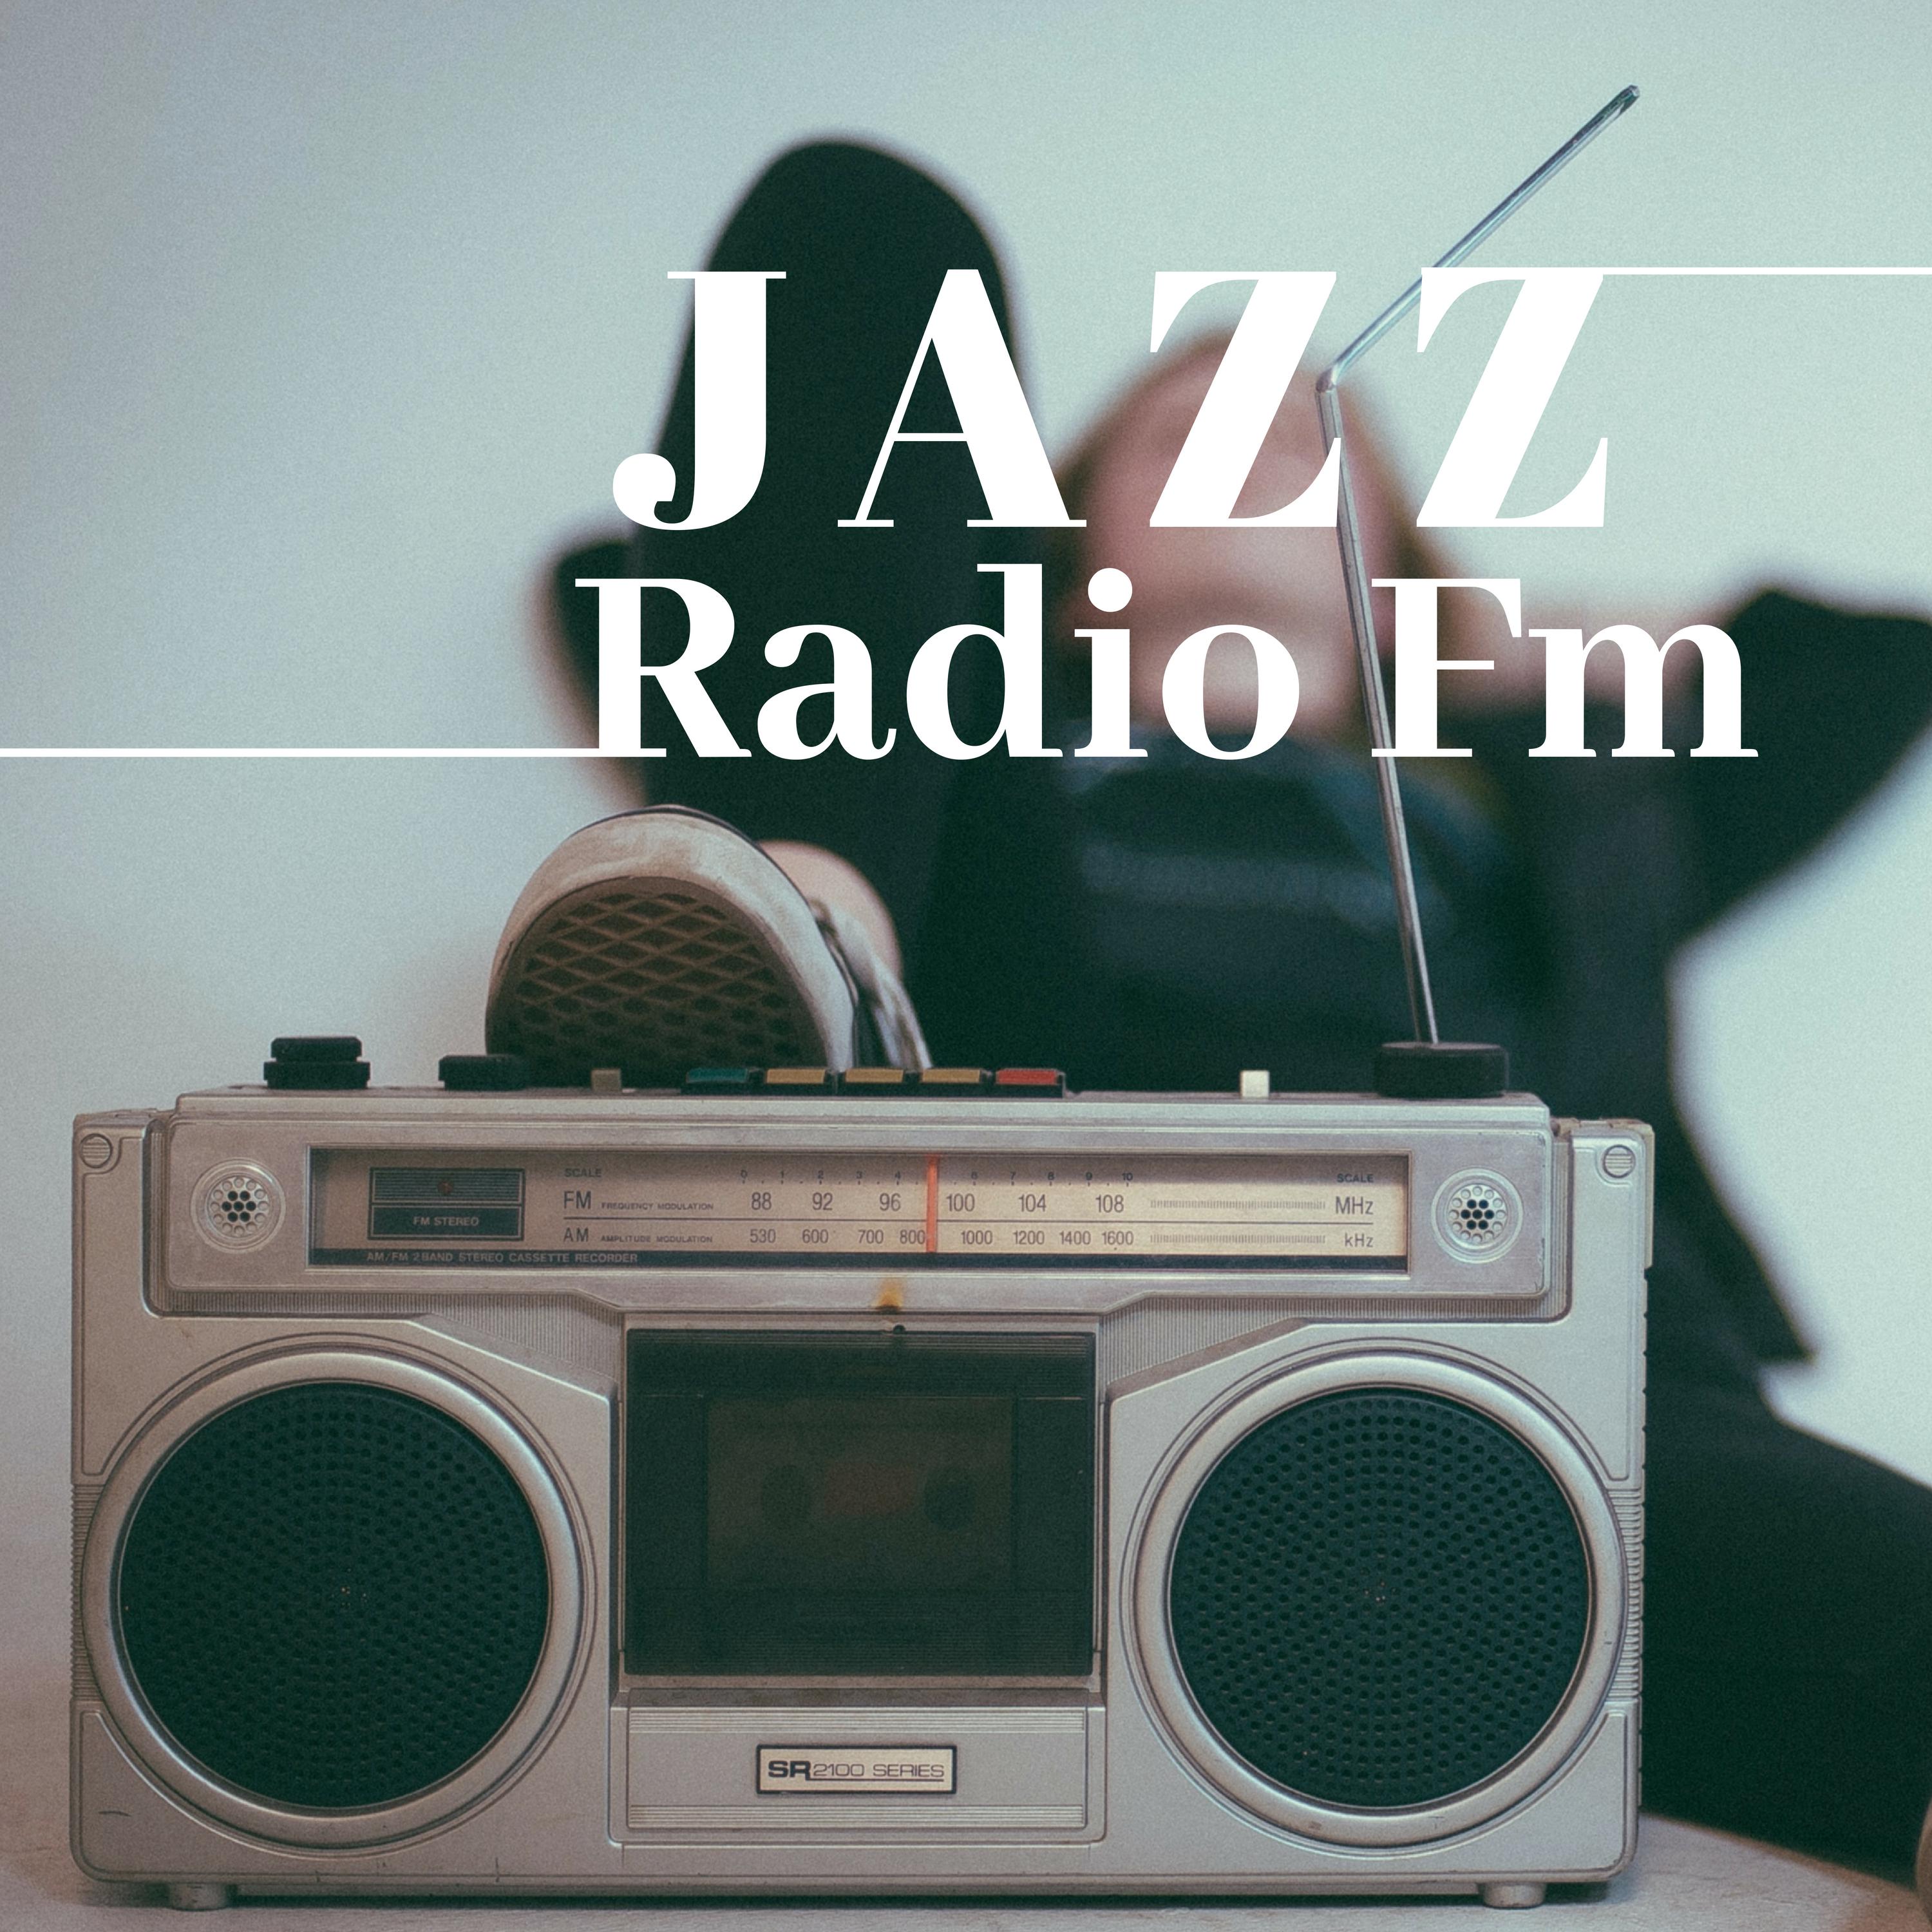 Jazz Radio Fm